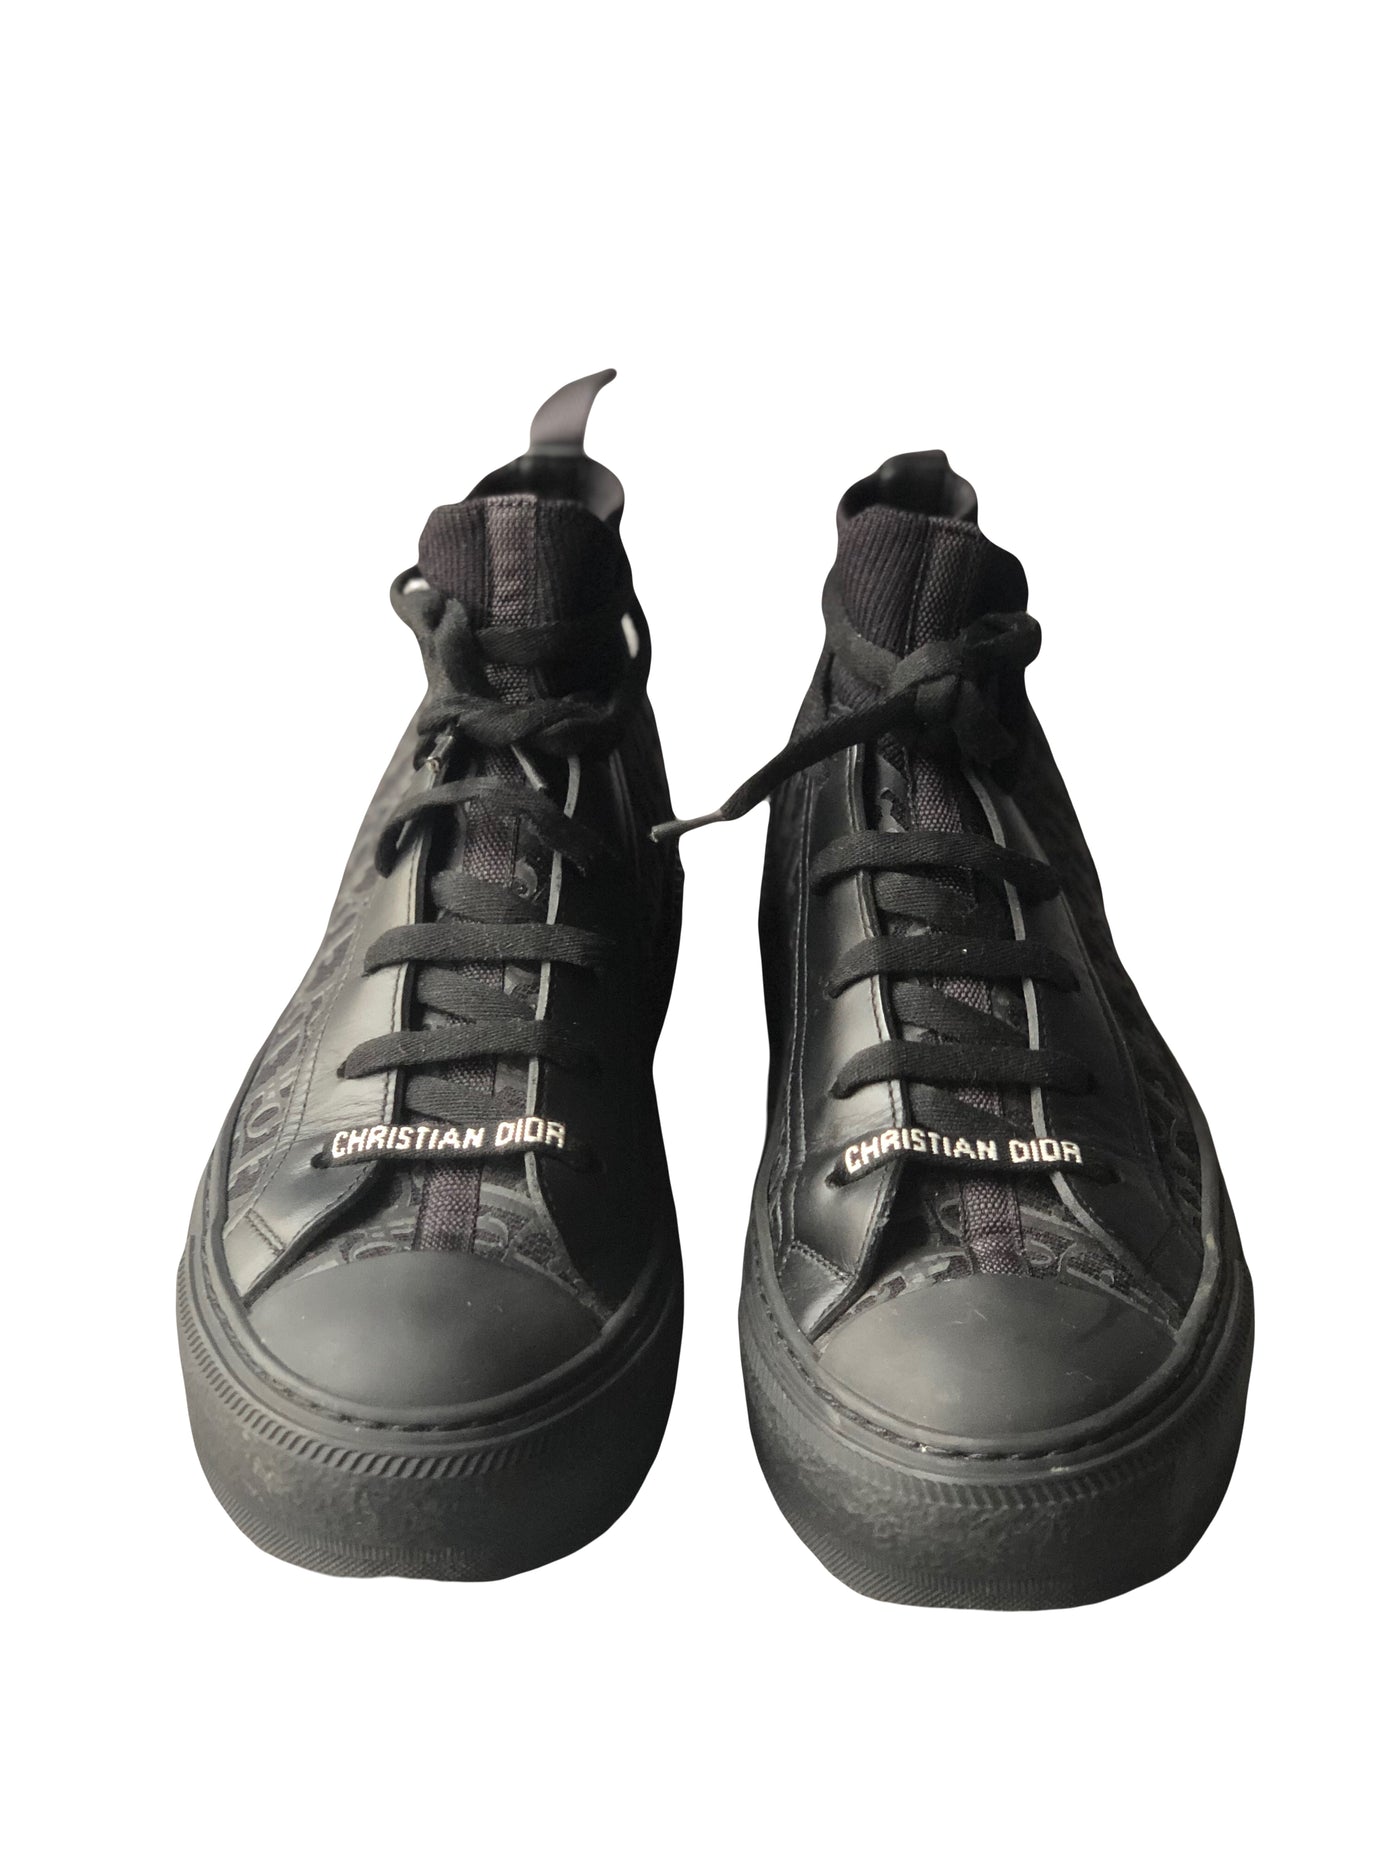 Christian DIOR Walk N Dior sneakers size 36 RRP: £890